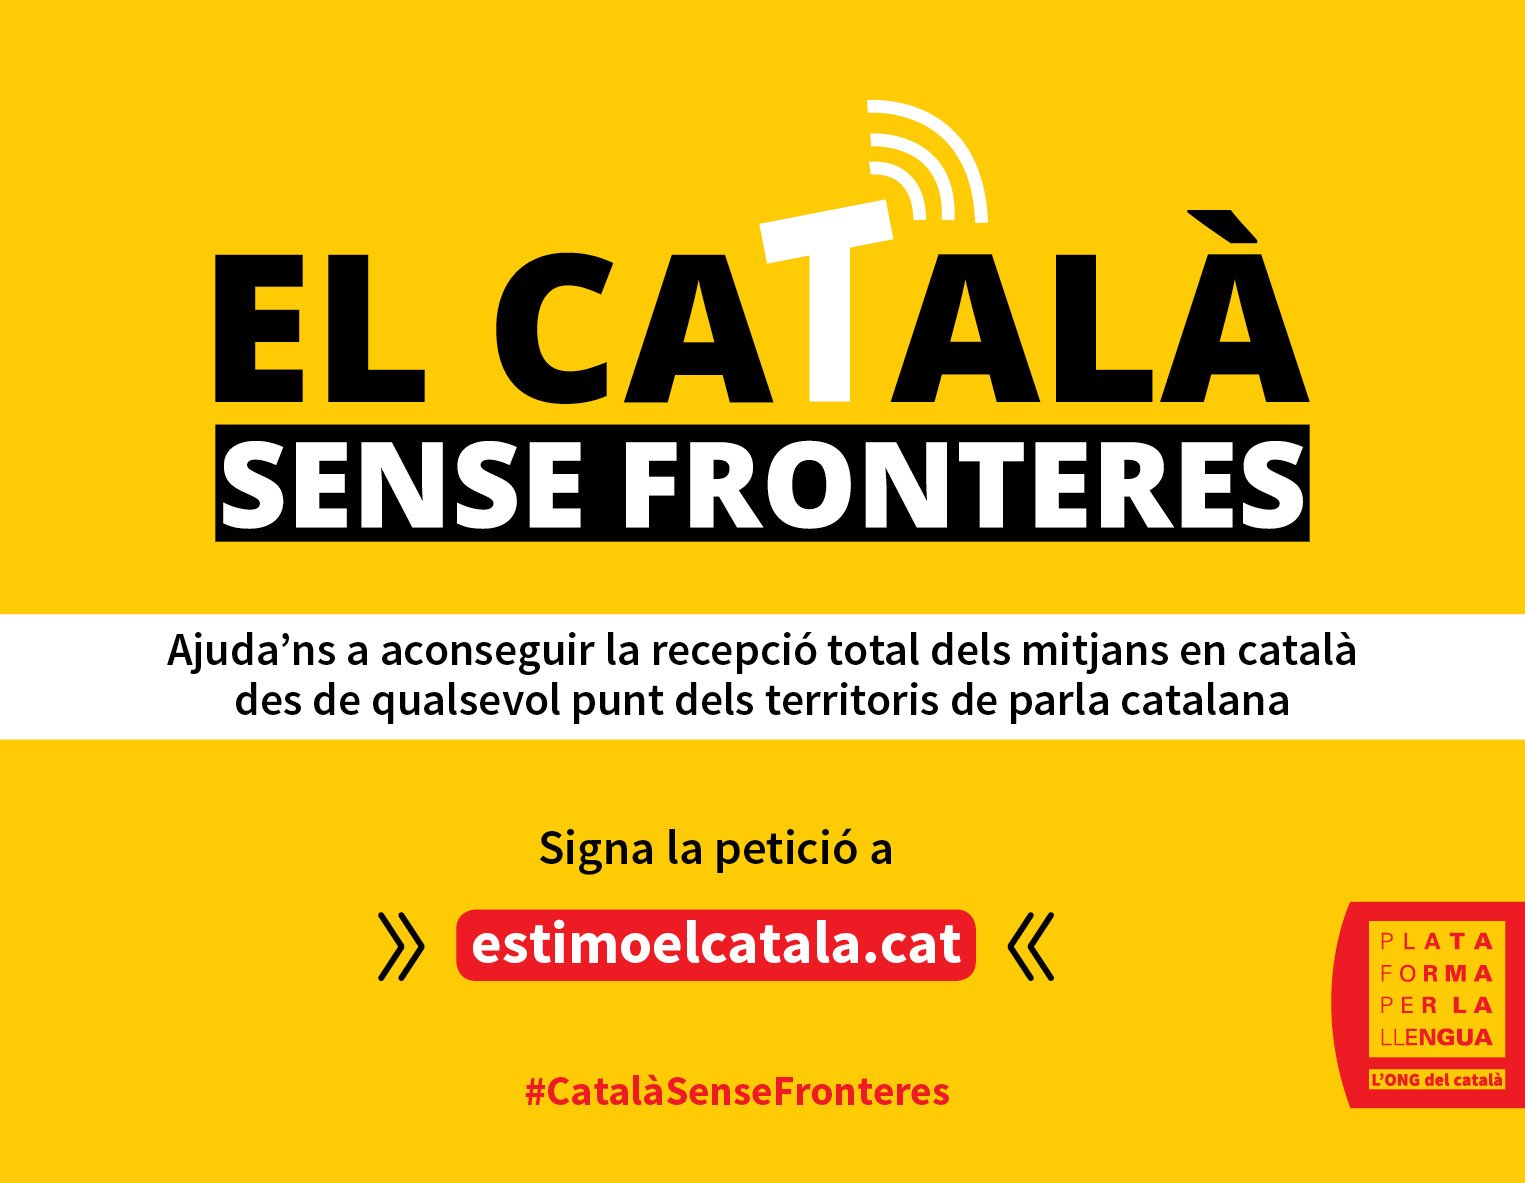 More linguistic discrimination against Catalan